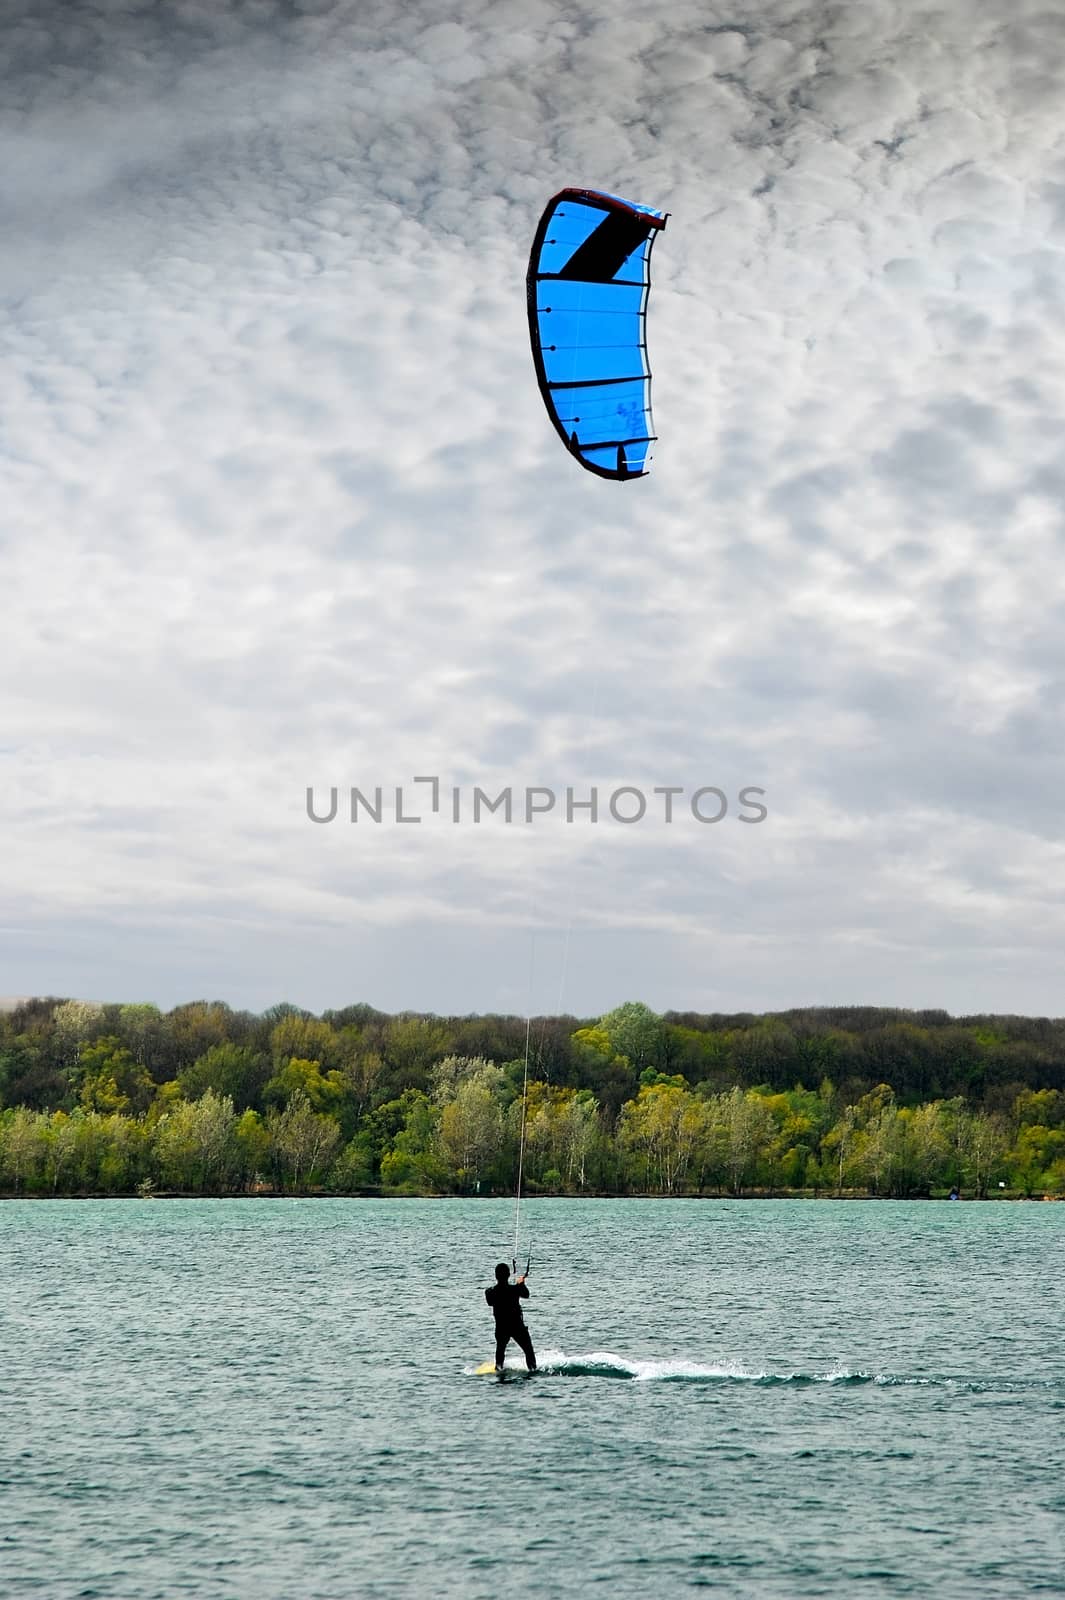 kite on the lake by studio023